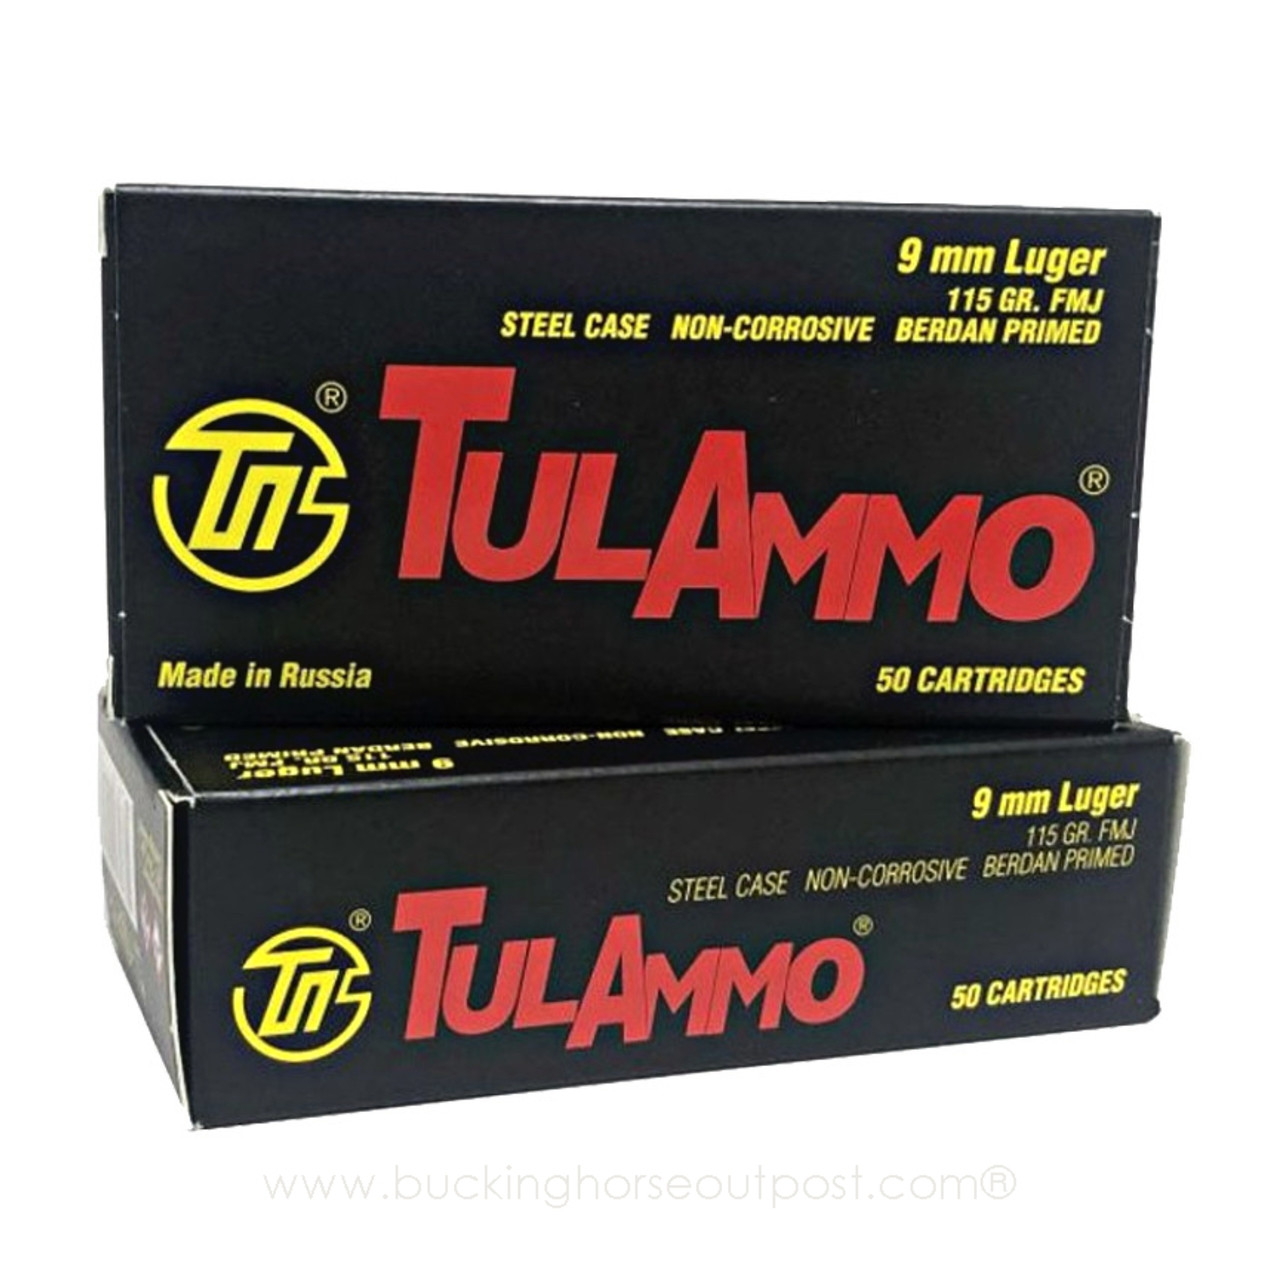 TulAmmo Pistol Cartridge 9mm Luger 115 Grain Full Metal Jacket Steel Case 50rds Per Box (TA919150)- FREE SHIPPING ON ORDERS OVER $175